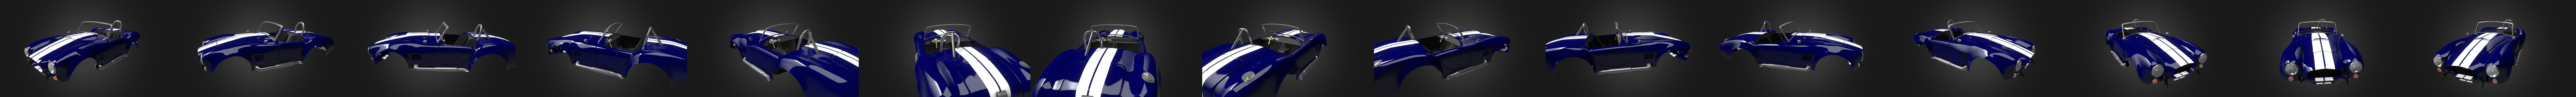 Shelby Cobra 3D Metall Autoaufkleber Silber